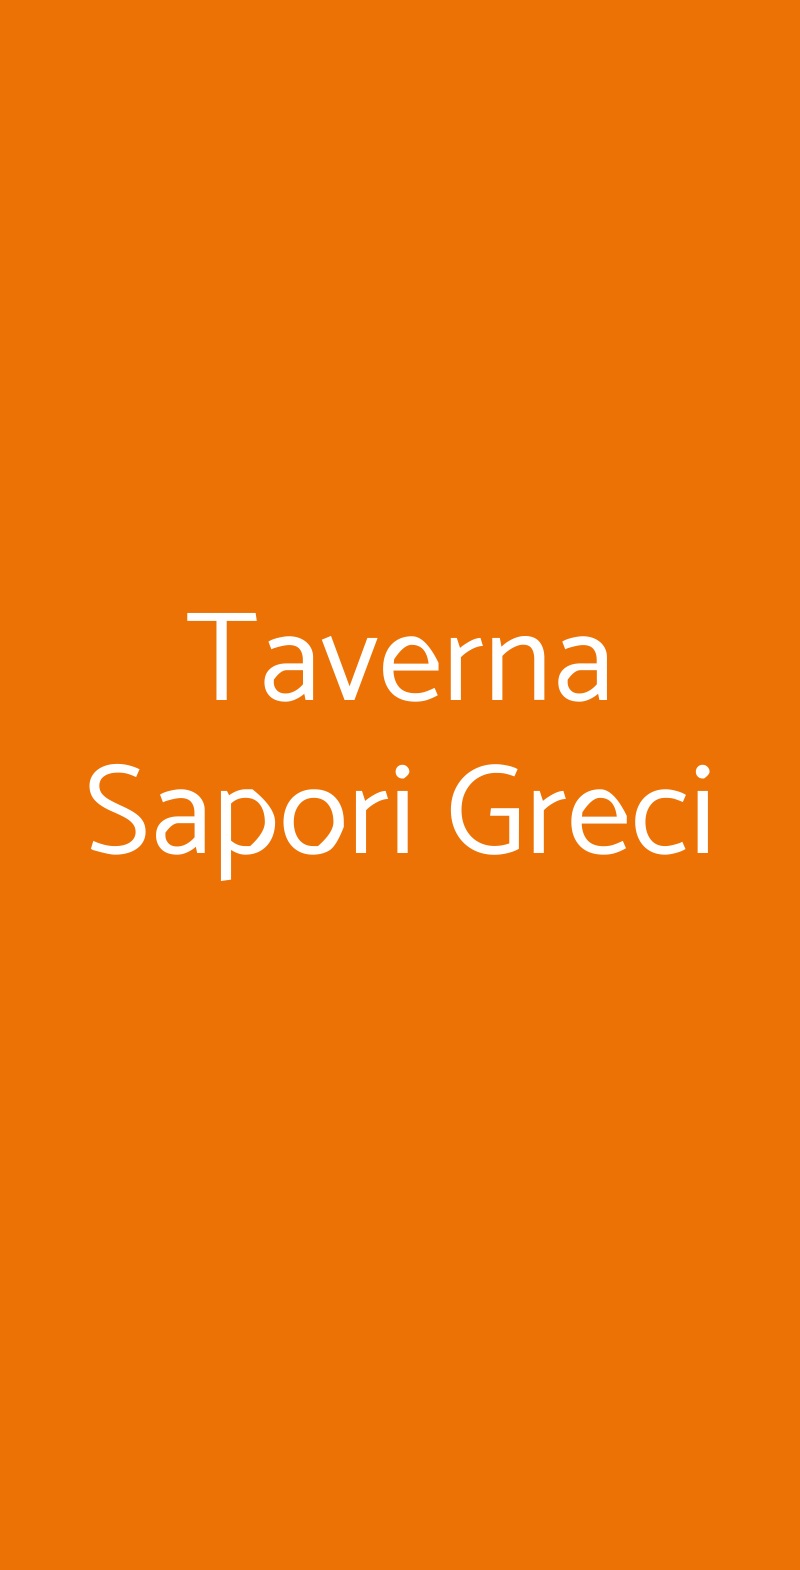 Taverna Sapori Greci Trieste menù 1 pagina